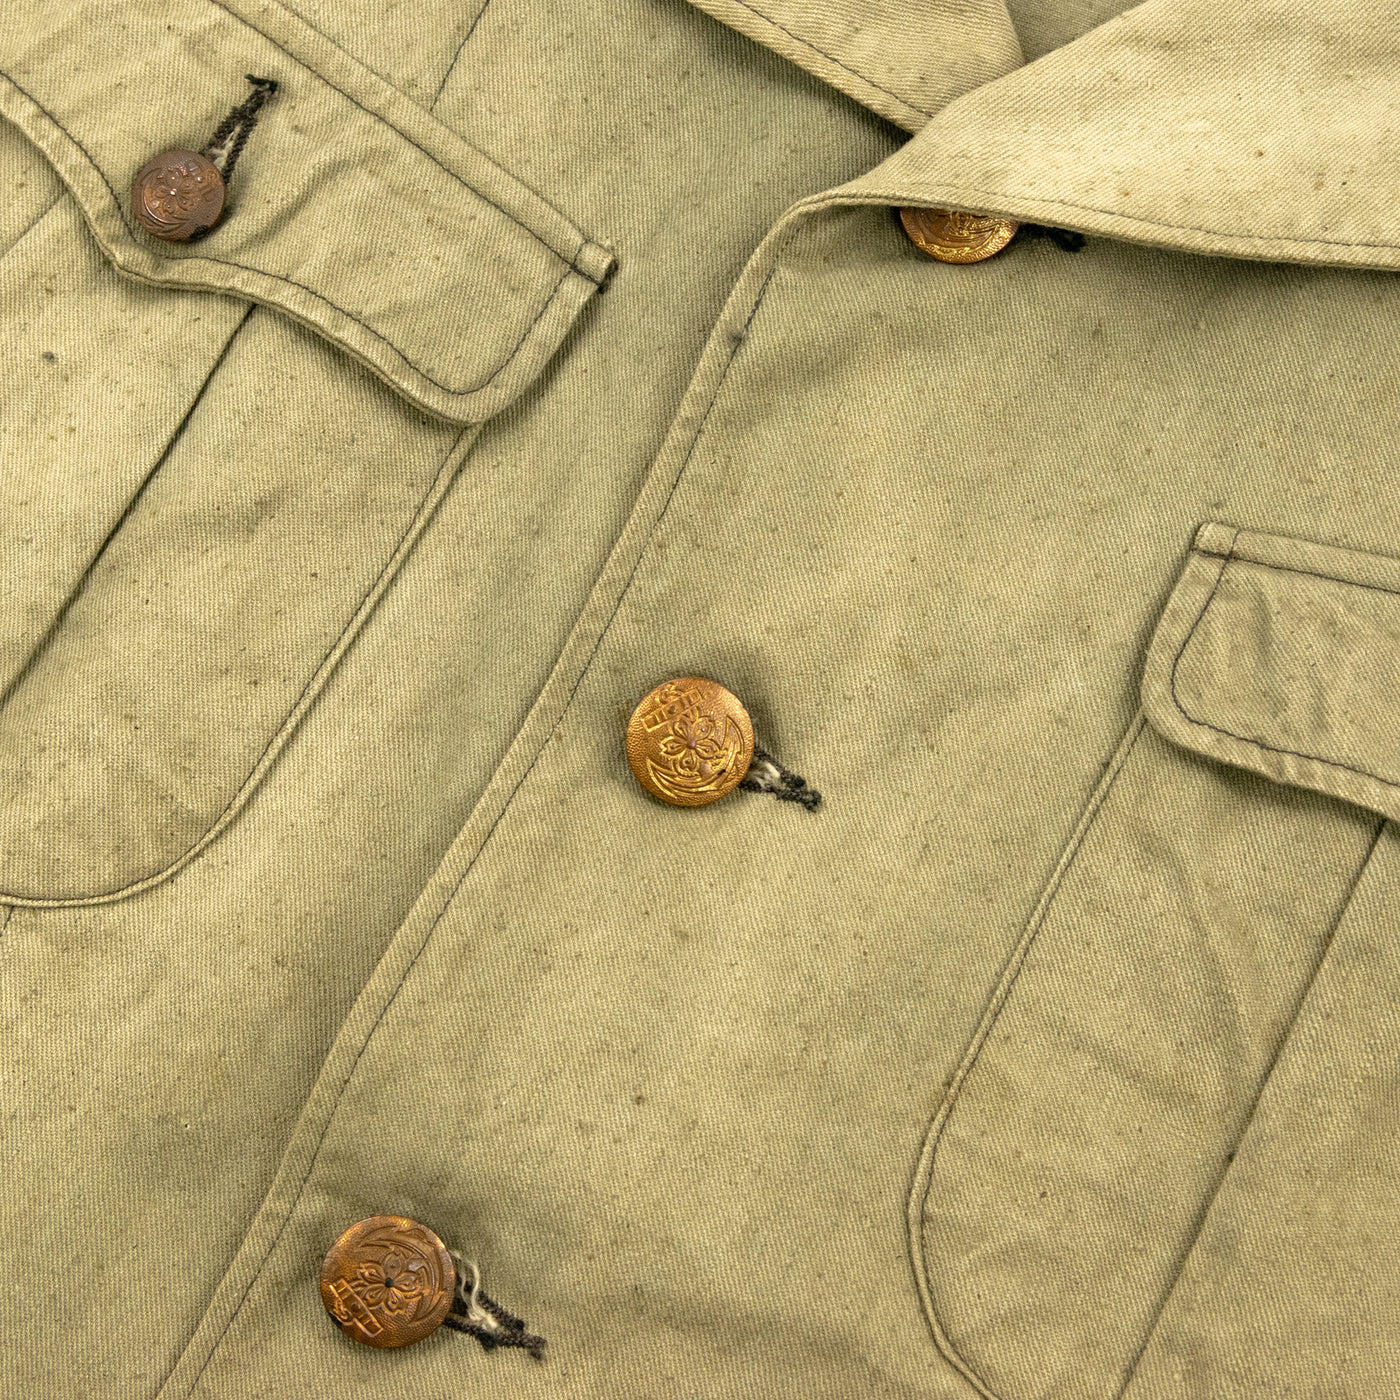 Vintage 1940s WW2 Era Japanese Navy Field Jacket - S Buttons